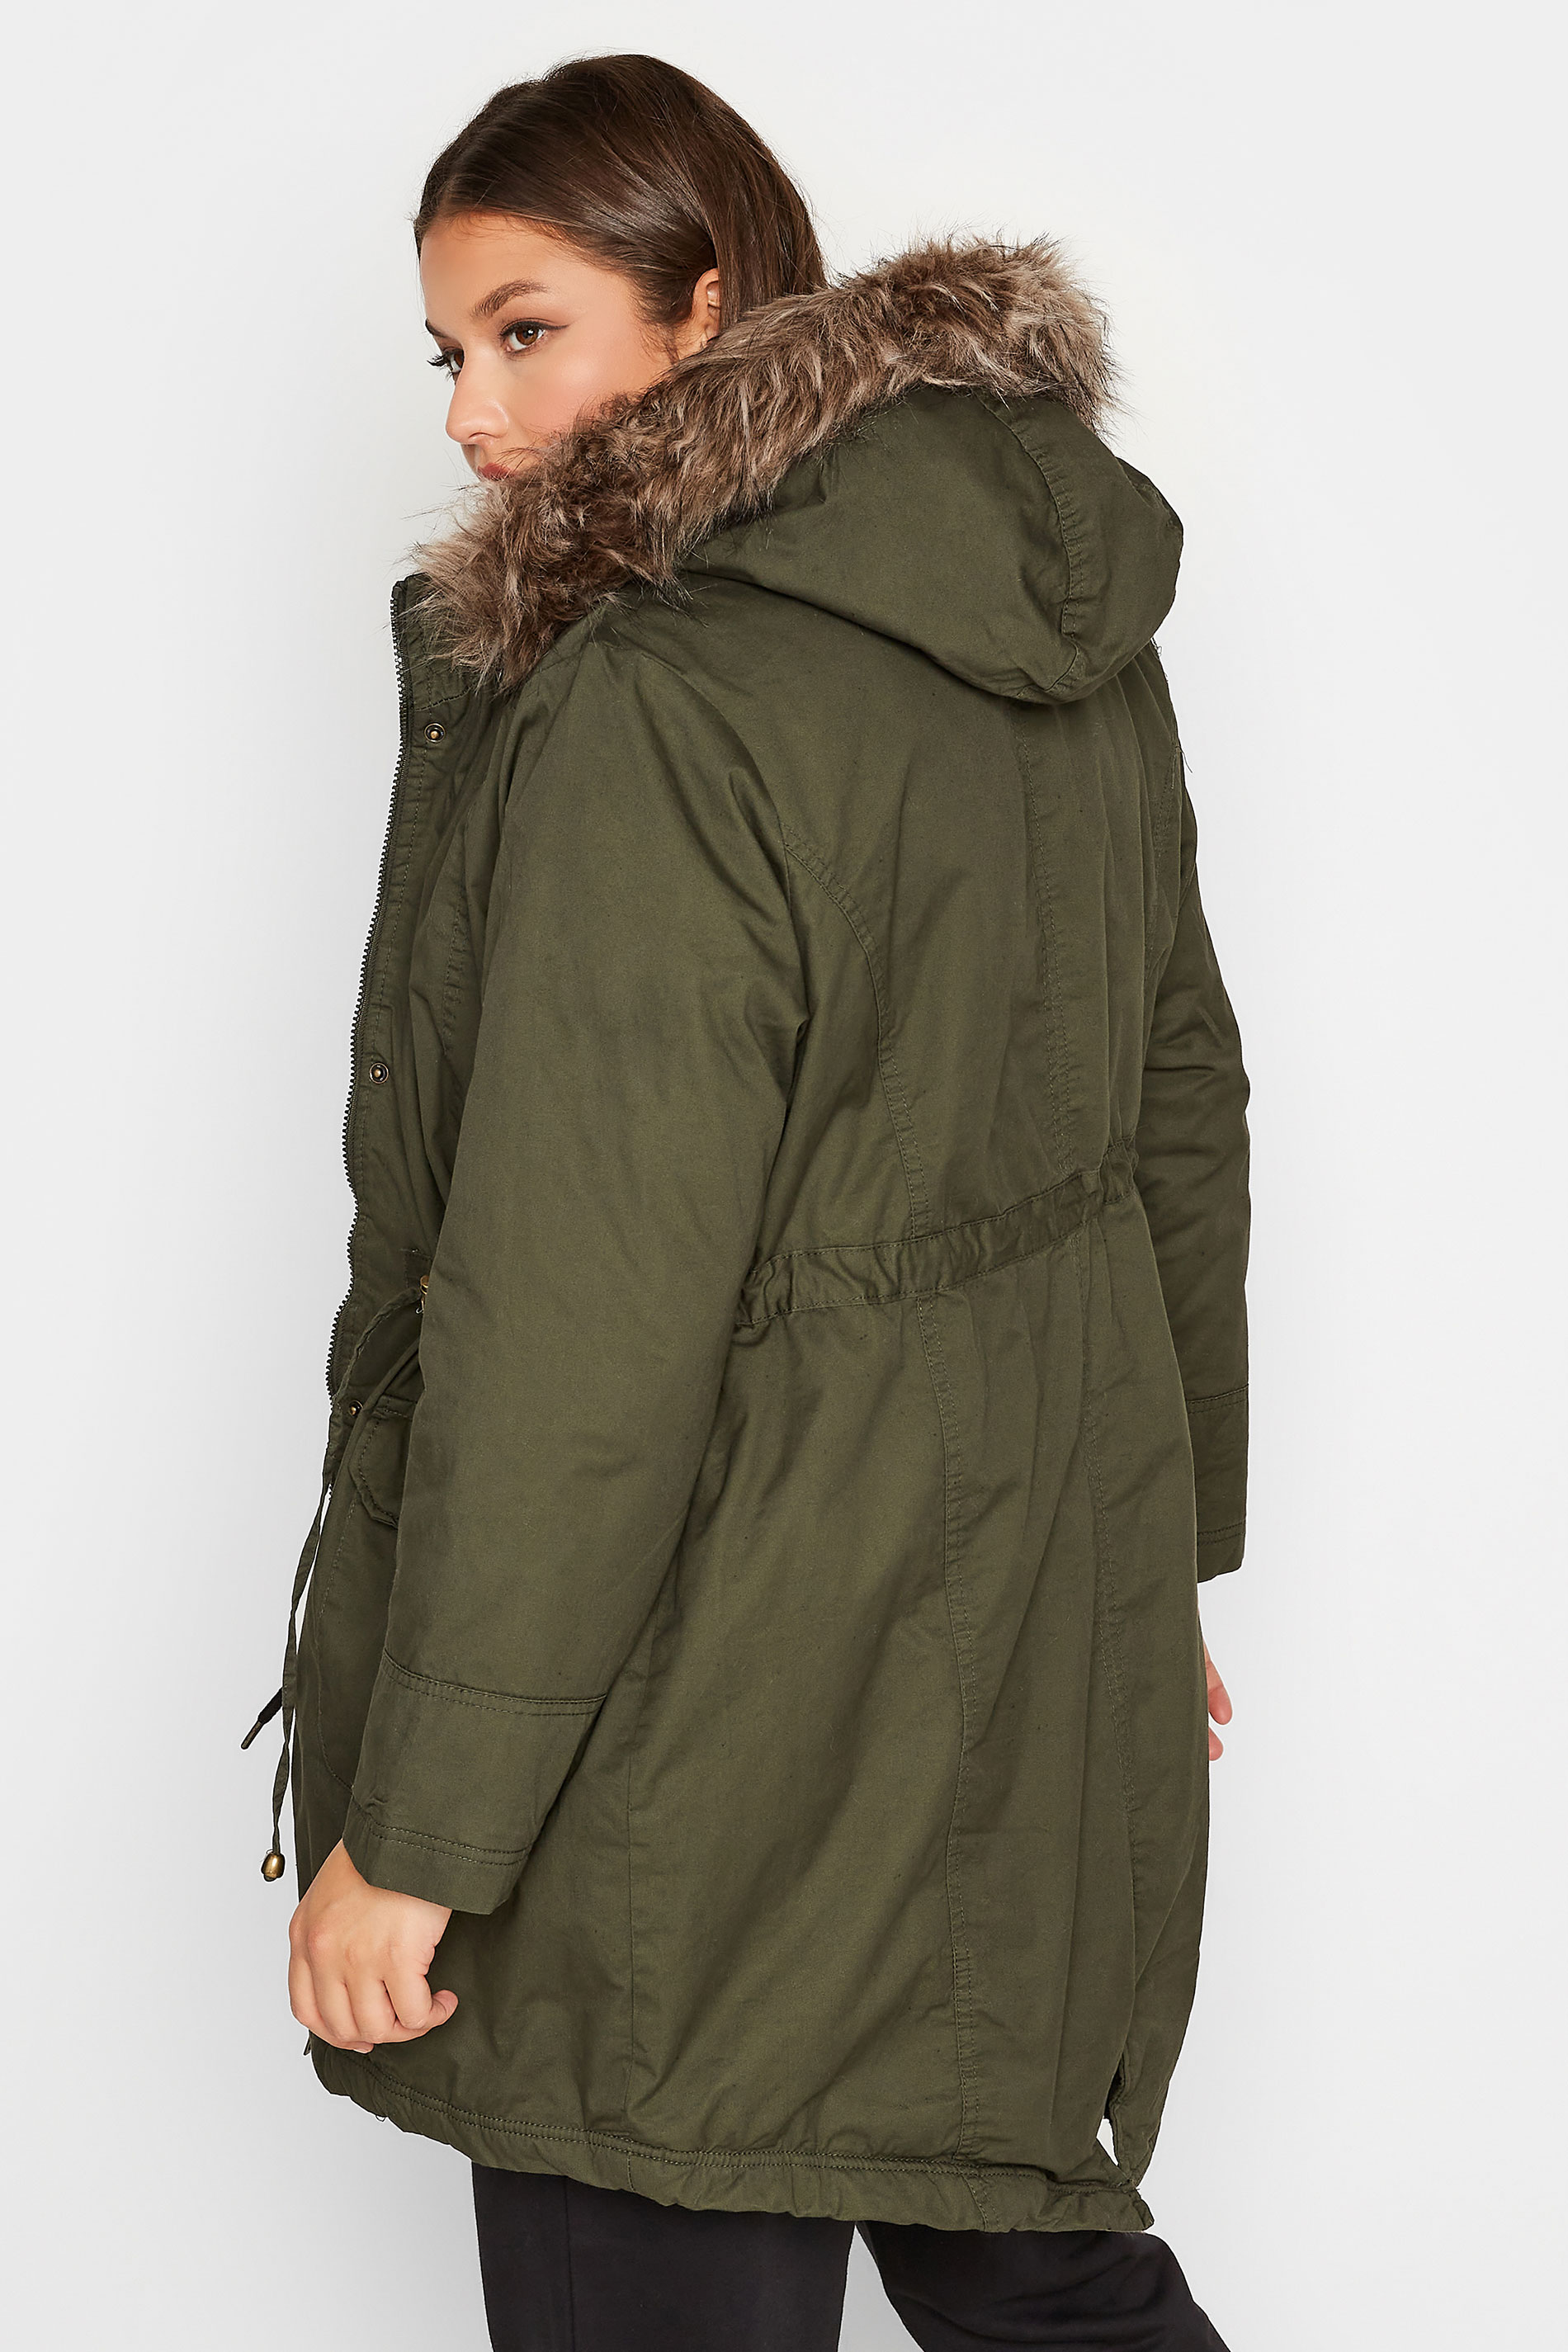 indstudering detektor Forstad Plus Size Khaki Green Faux Fur Lined Hooded Parka | Yours Clothing